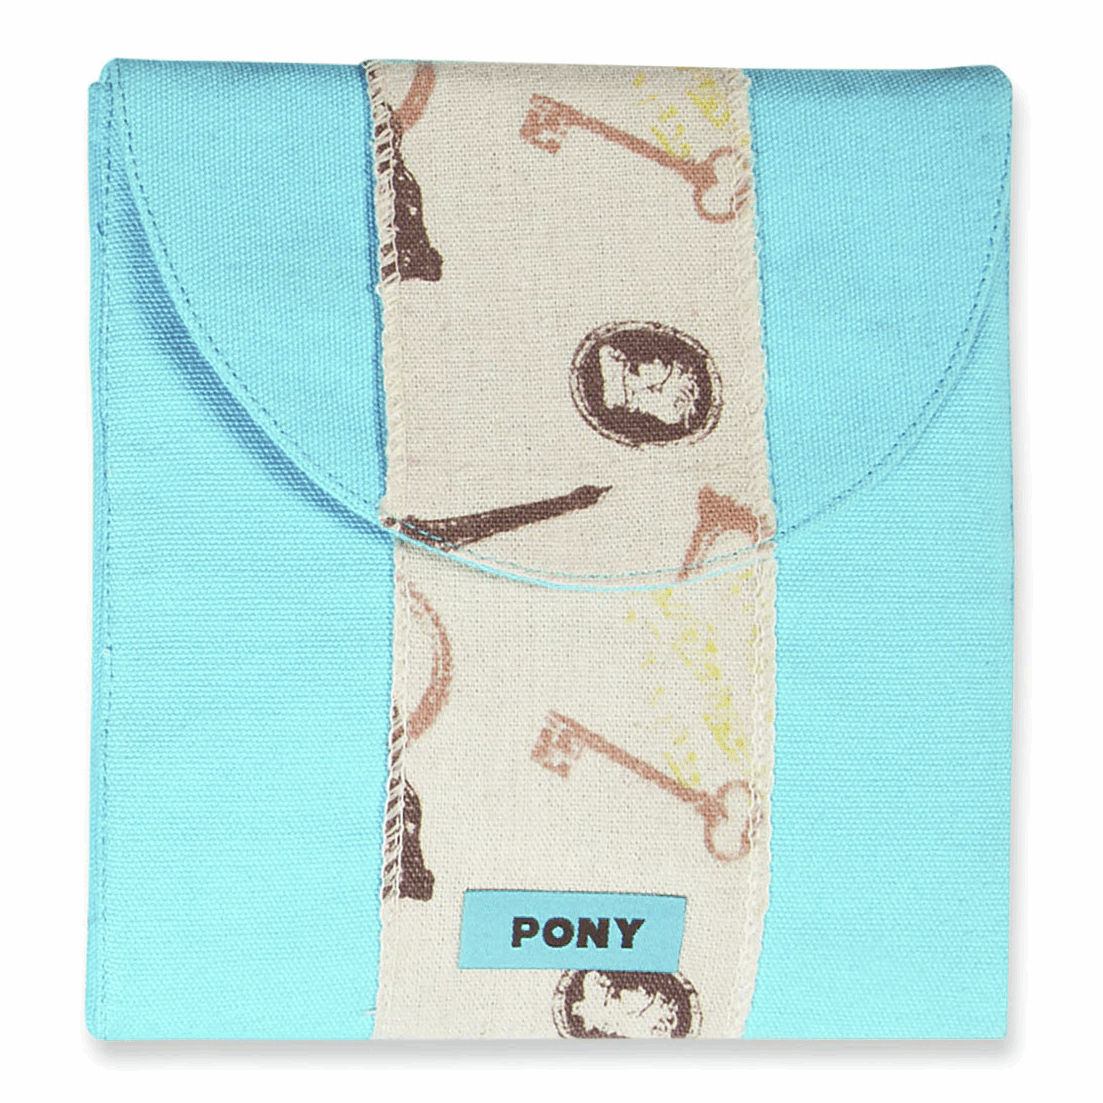 PONY Crochet Hook Set - Absolute, Blue Ribbon Maple 15cm